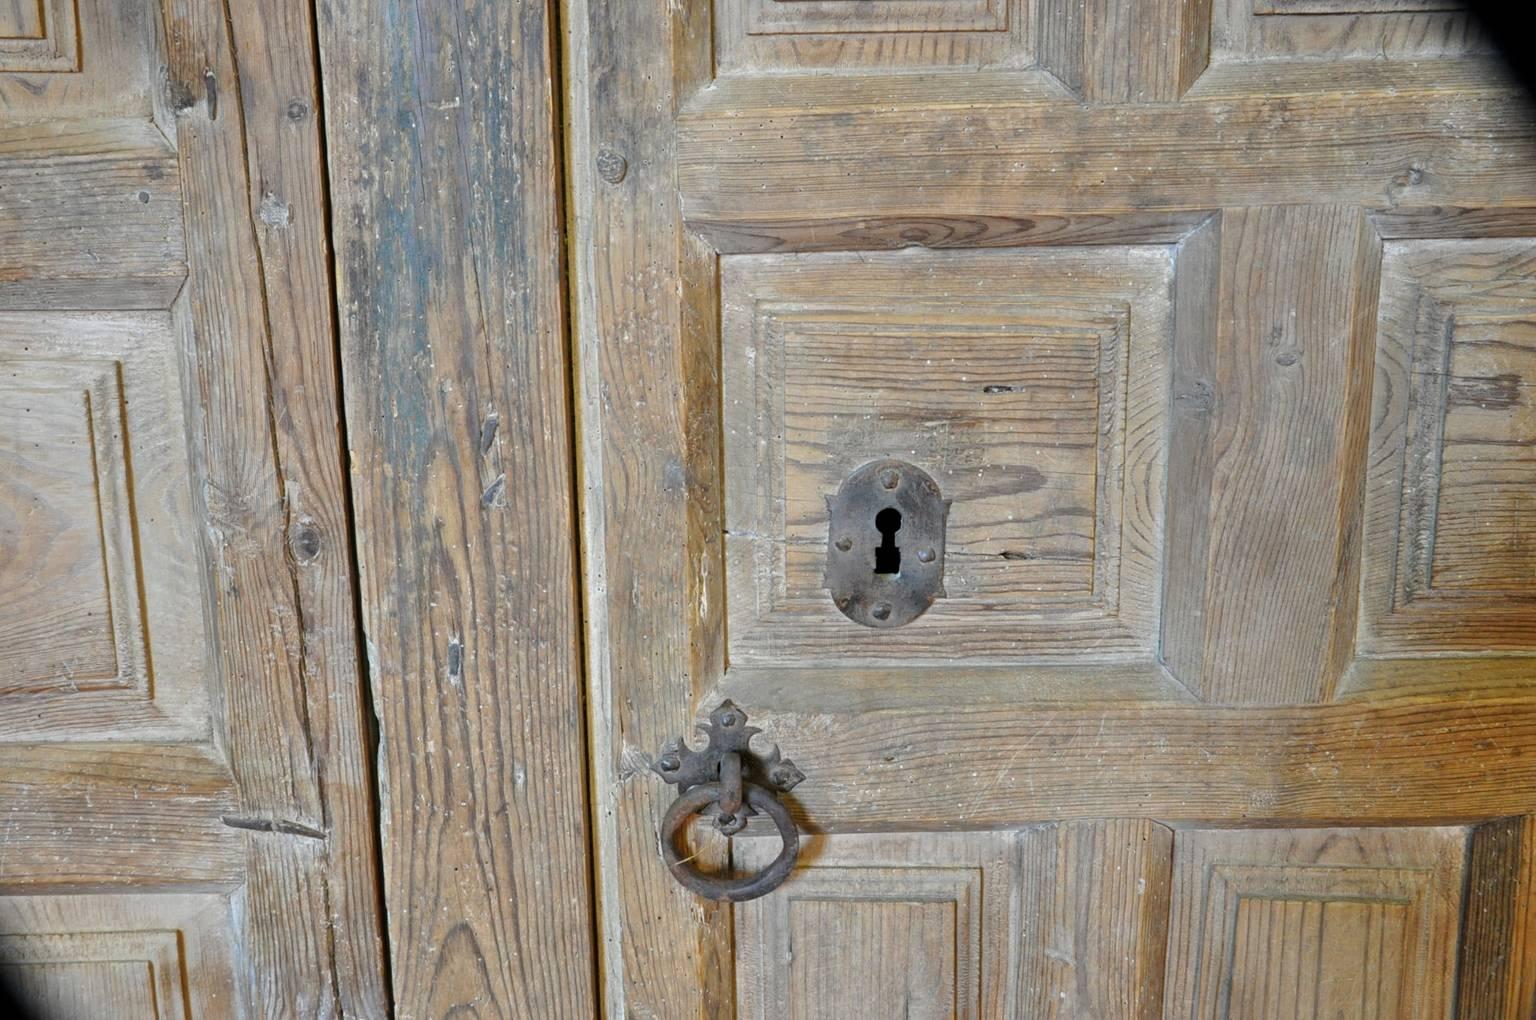 Spanish Pair of 18th Century Catalan Entry Doors